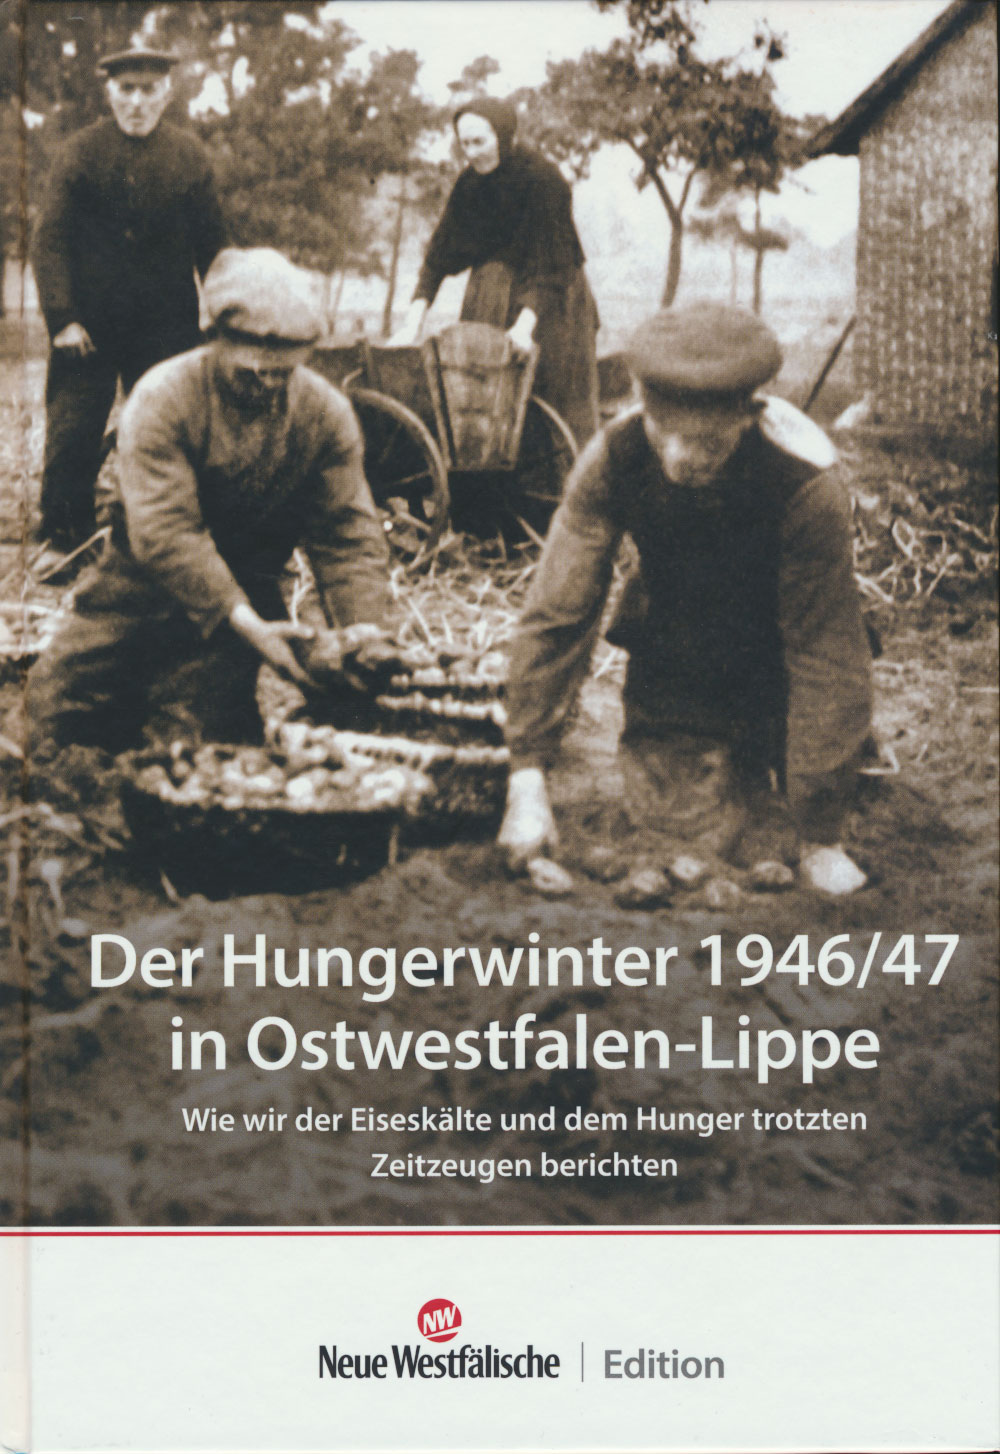 Der Hungerwinter 1946/47